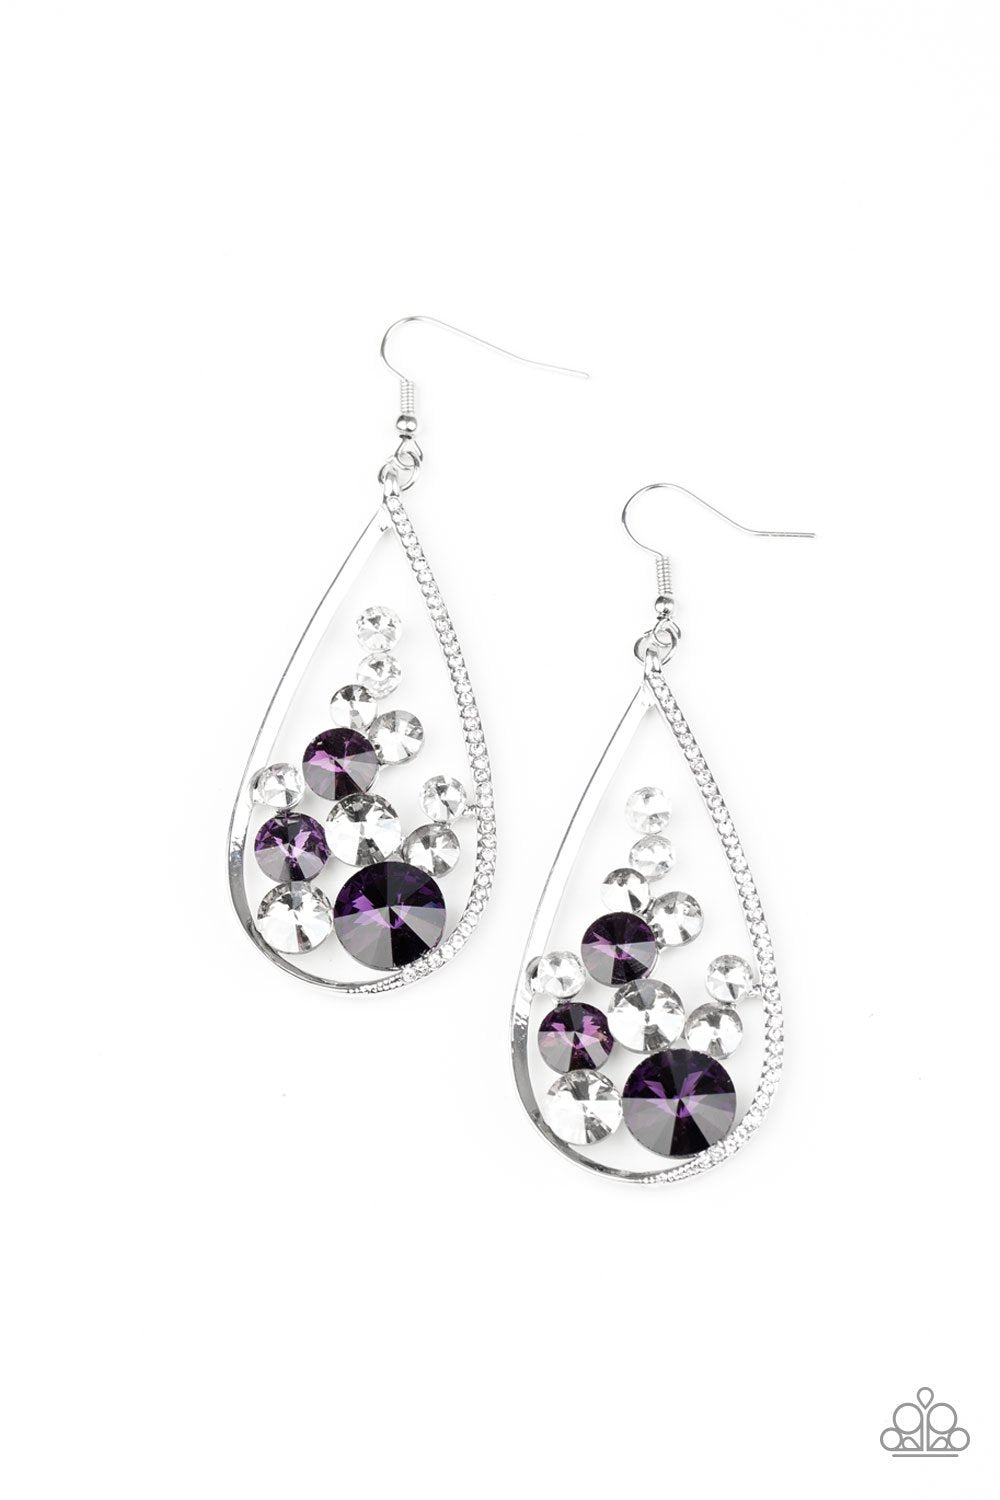 Tempest Twinkle Purple Rhinestone Earrings - Paparazzi Accessories - lightbox -CarasShop.com - $5 Jewelry by Cara Jewels